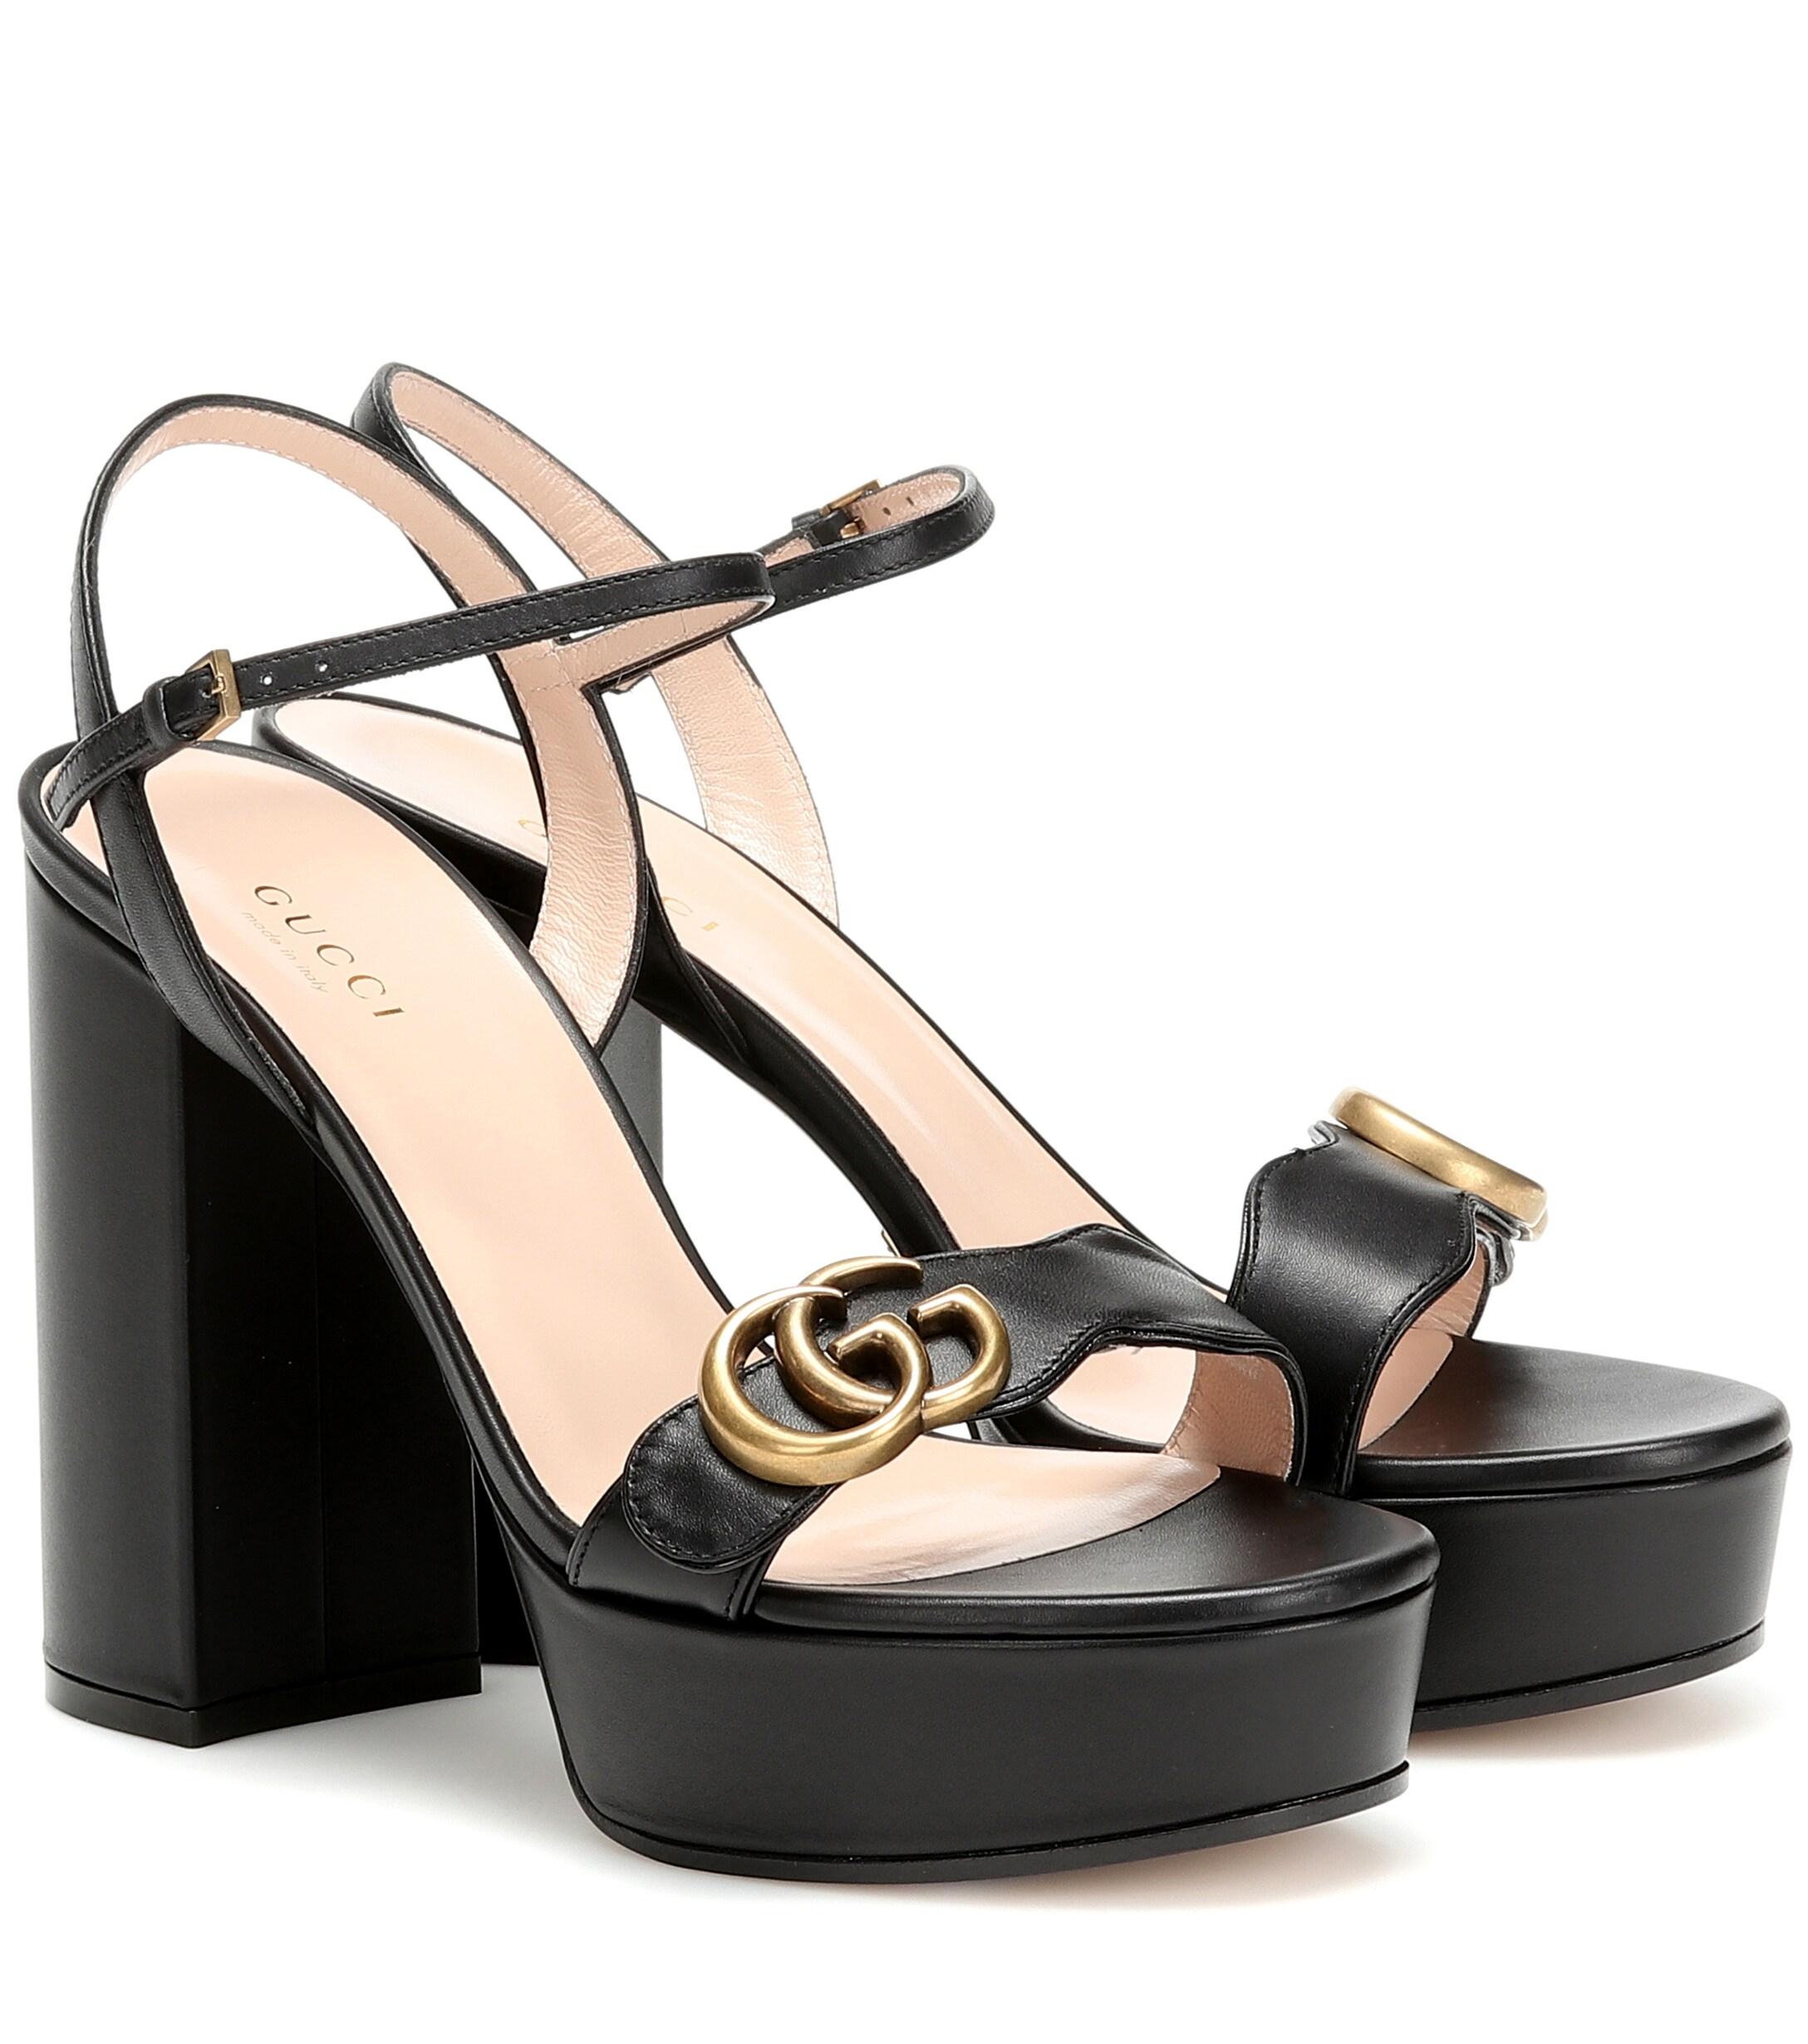 Gucci Marmont Platform Leather Sandals in Nero (Black) - Save 1% - Lyst